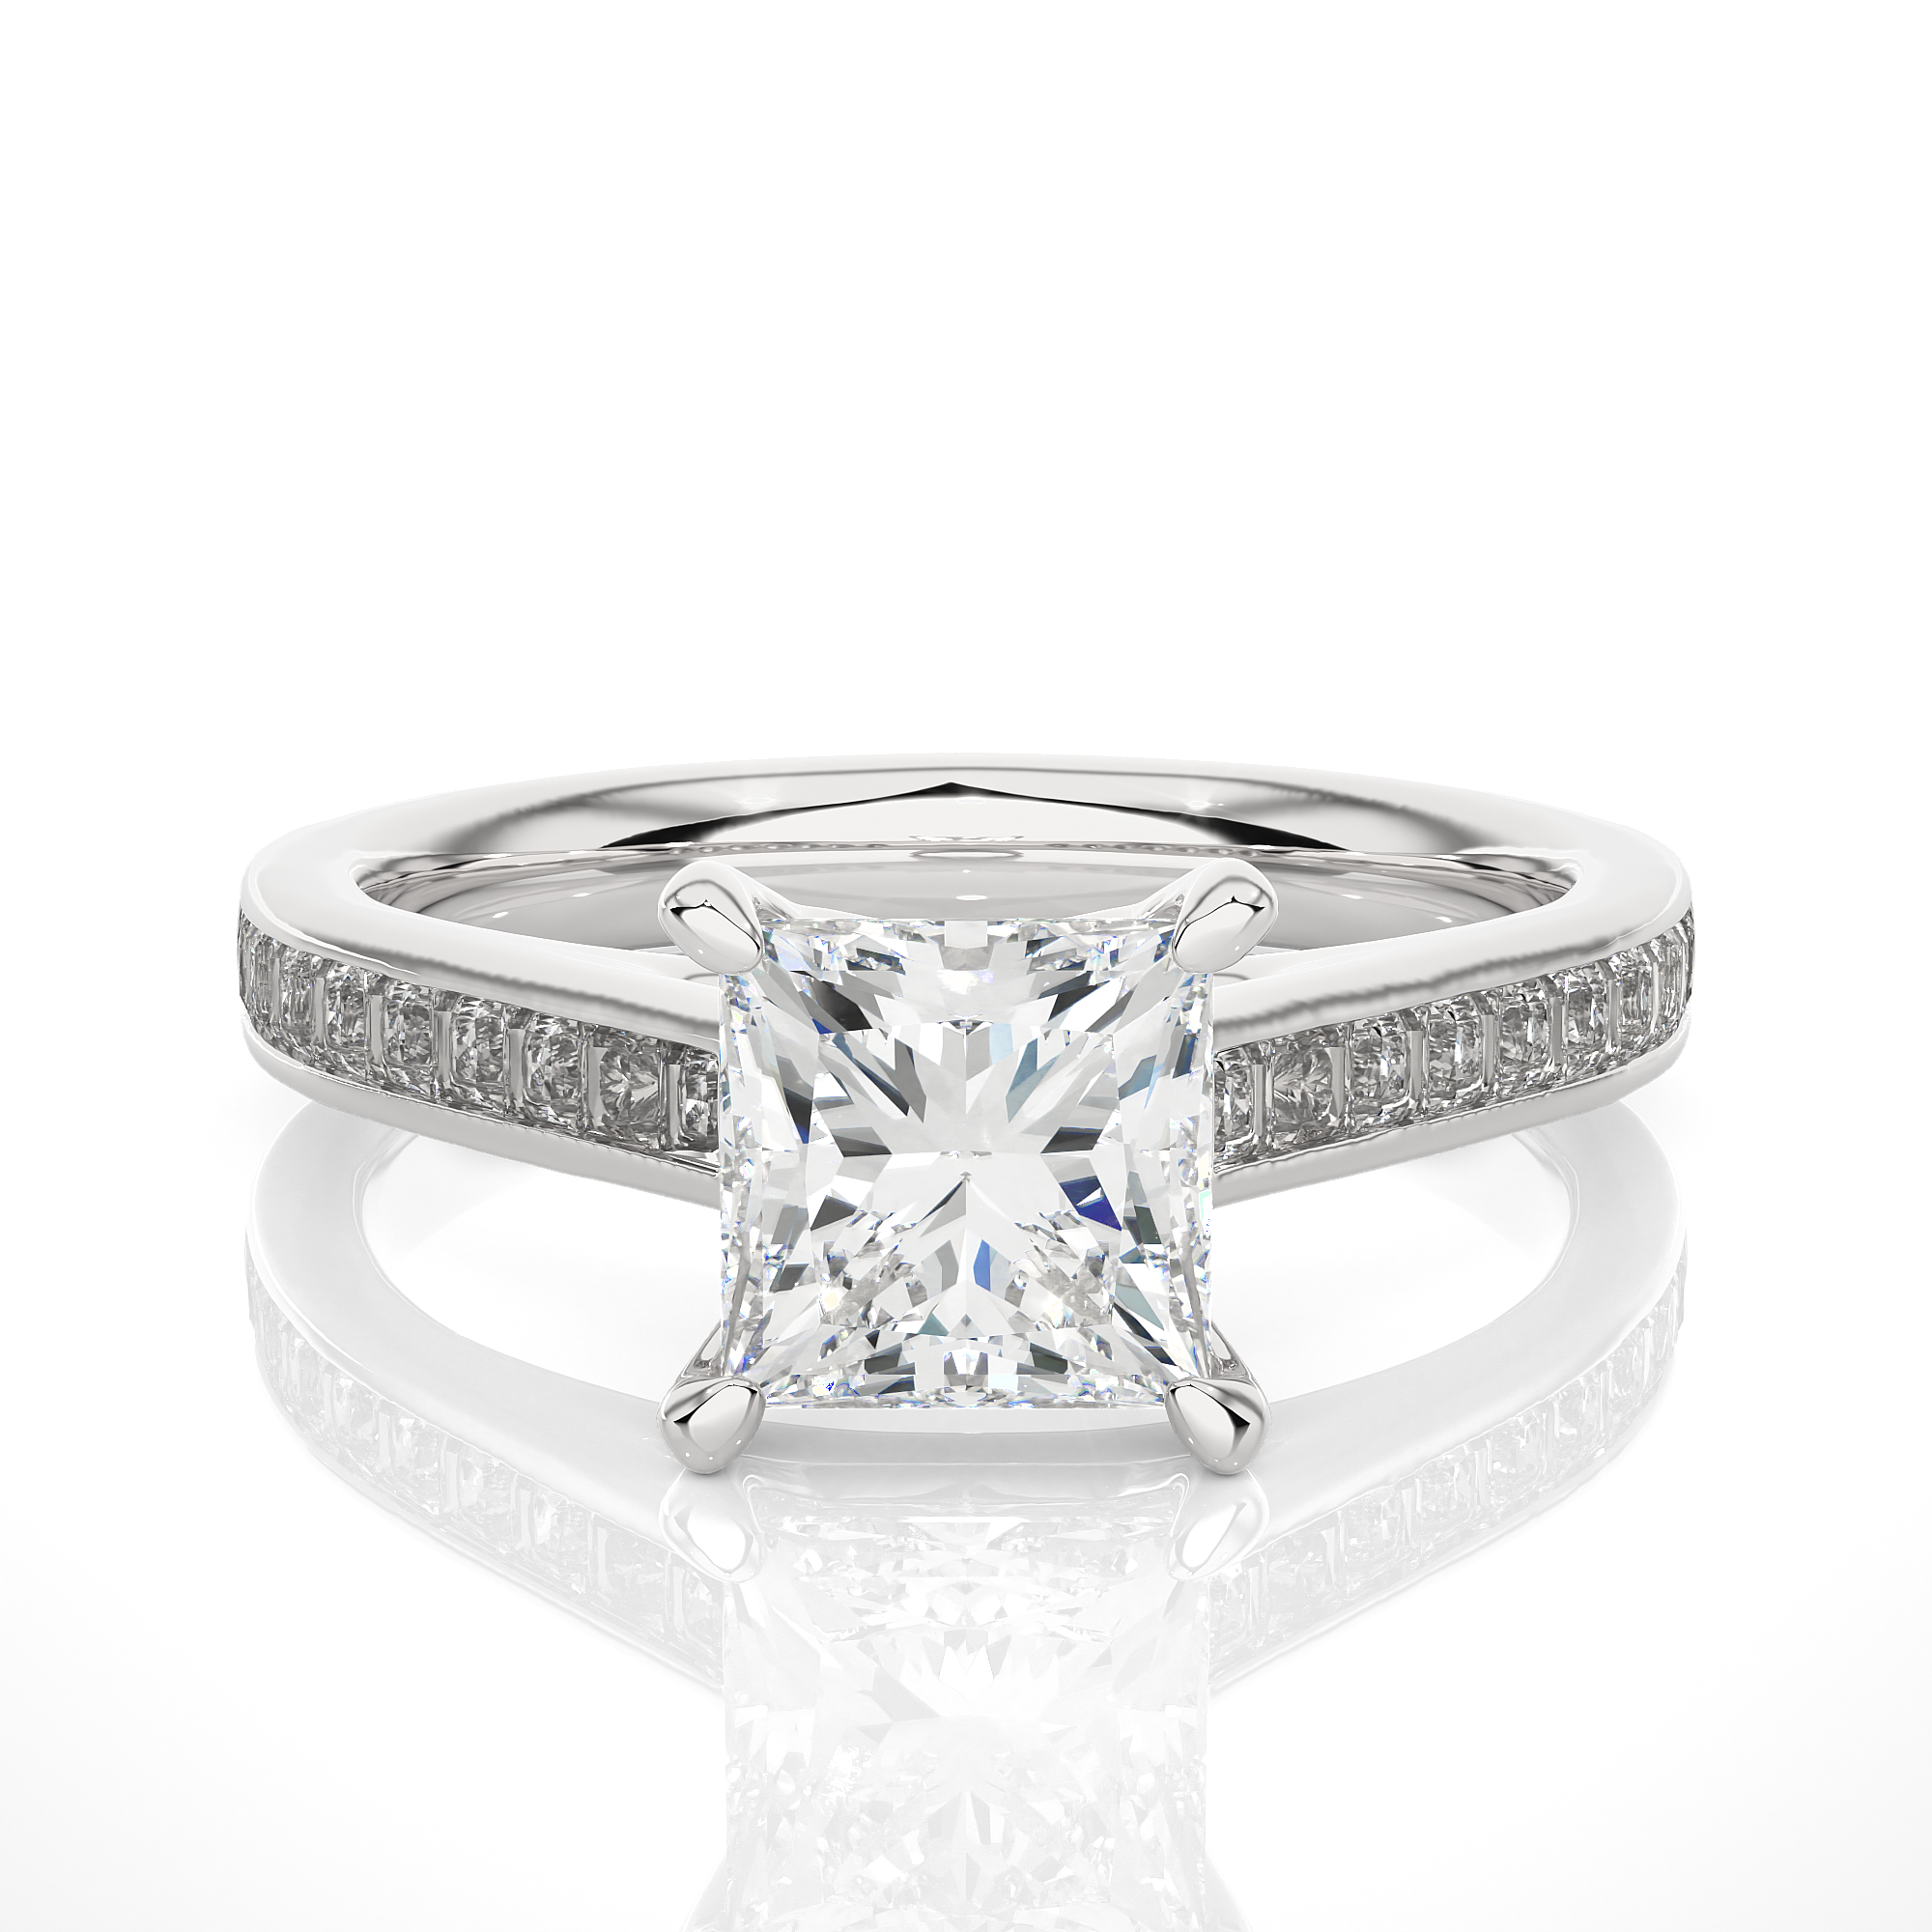 1.95Ct Princess Cut Solitaire Lab Grown Diamond Ring in 14Kt White Gold - Blu Diamonds